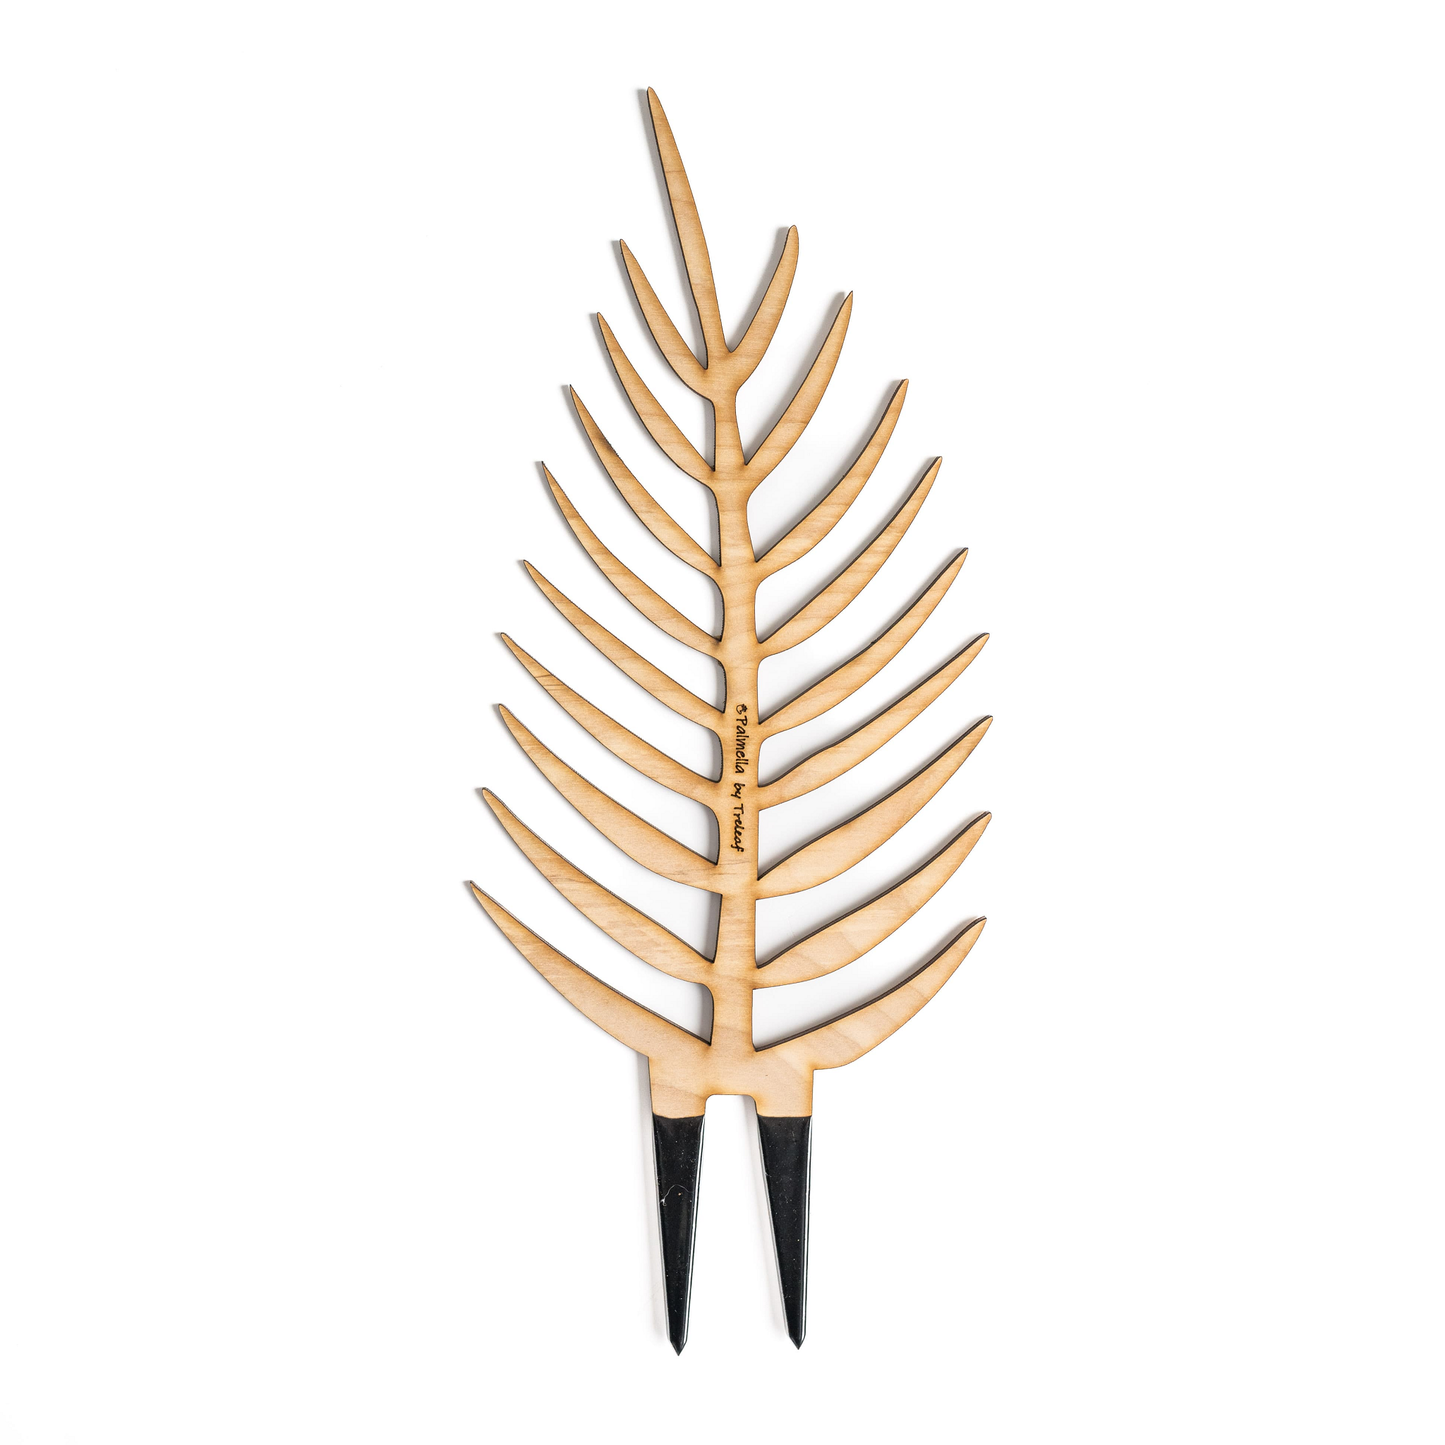 Customizable wooden plant trellis - Palm leaf